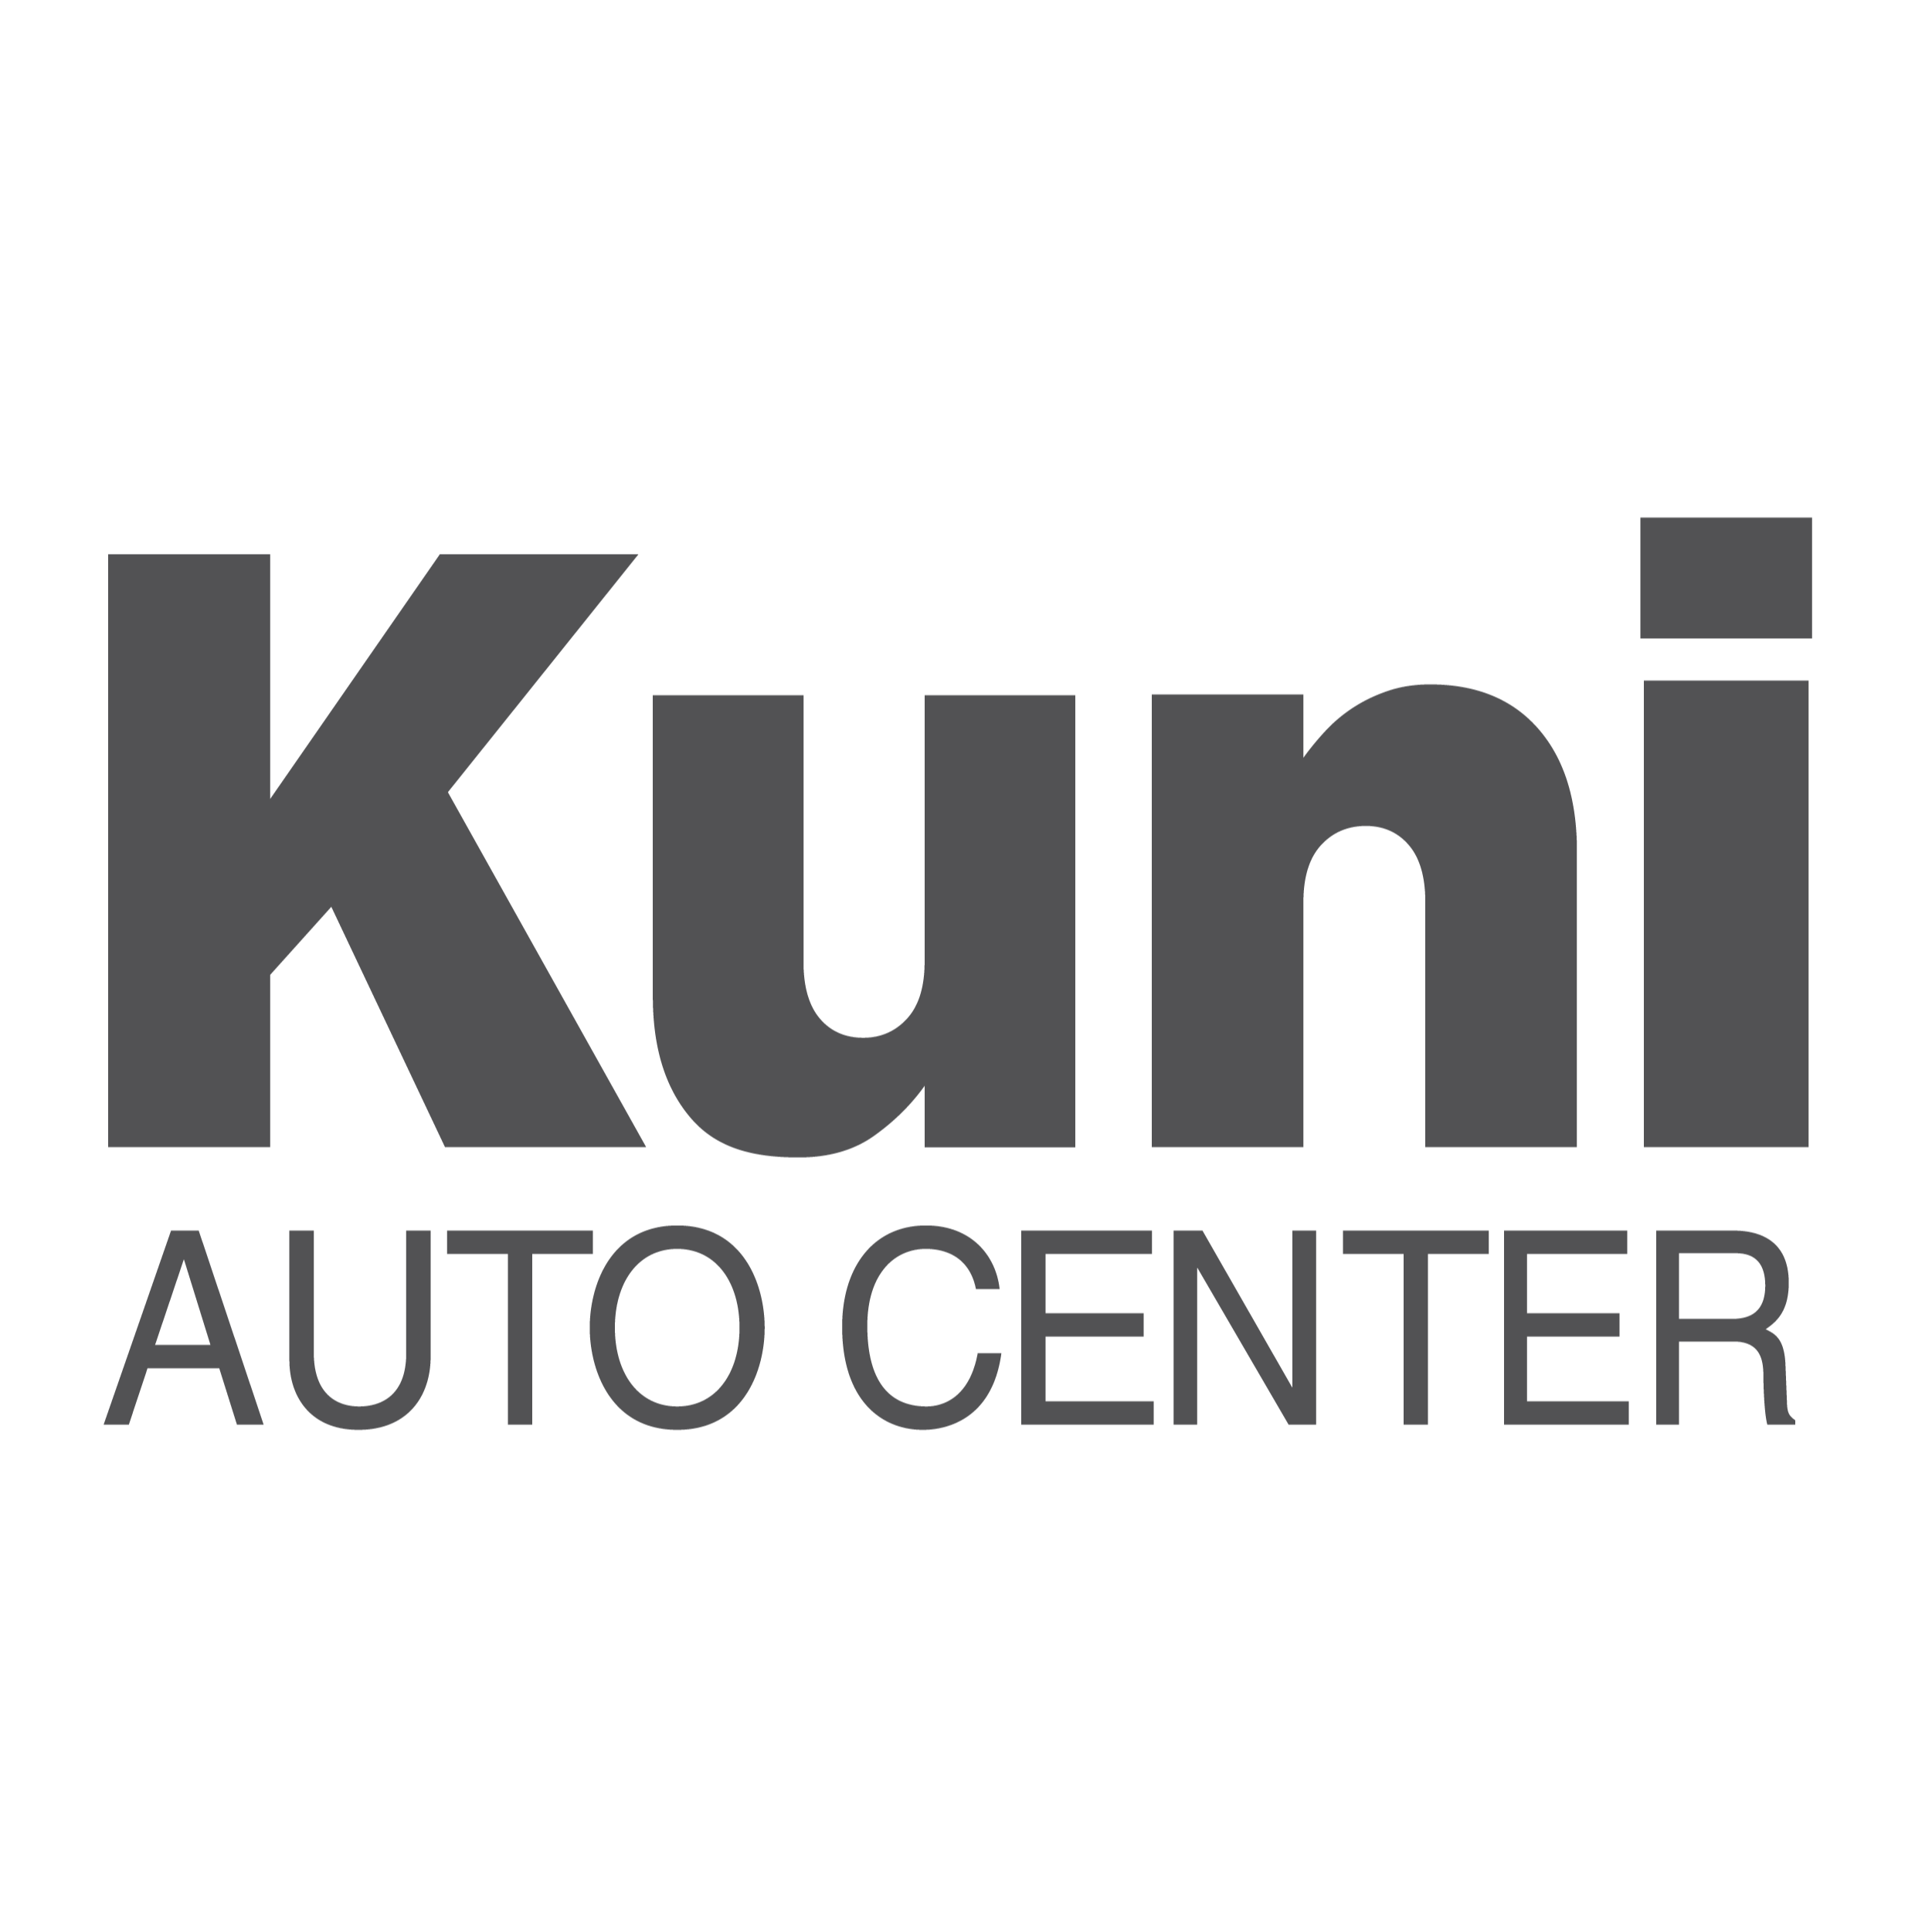 Kuni Auto Center - Beaverton, OR 97005 - (503)928-5670 | ShowMeLocal.com